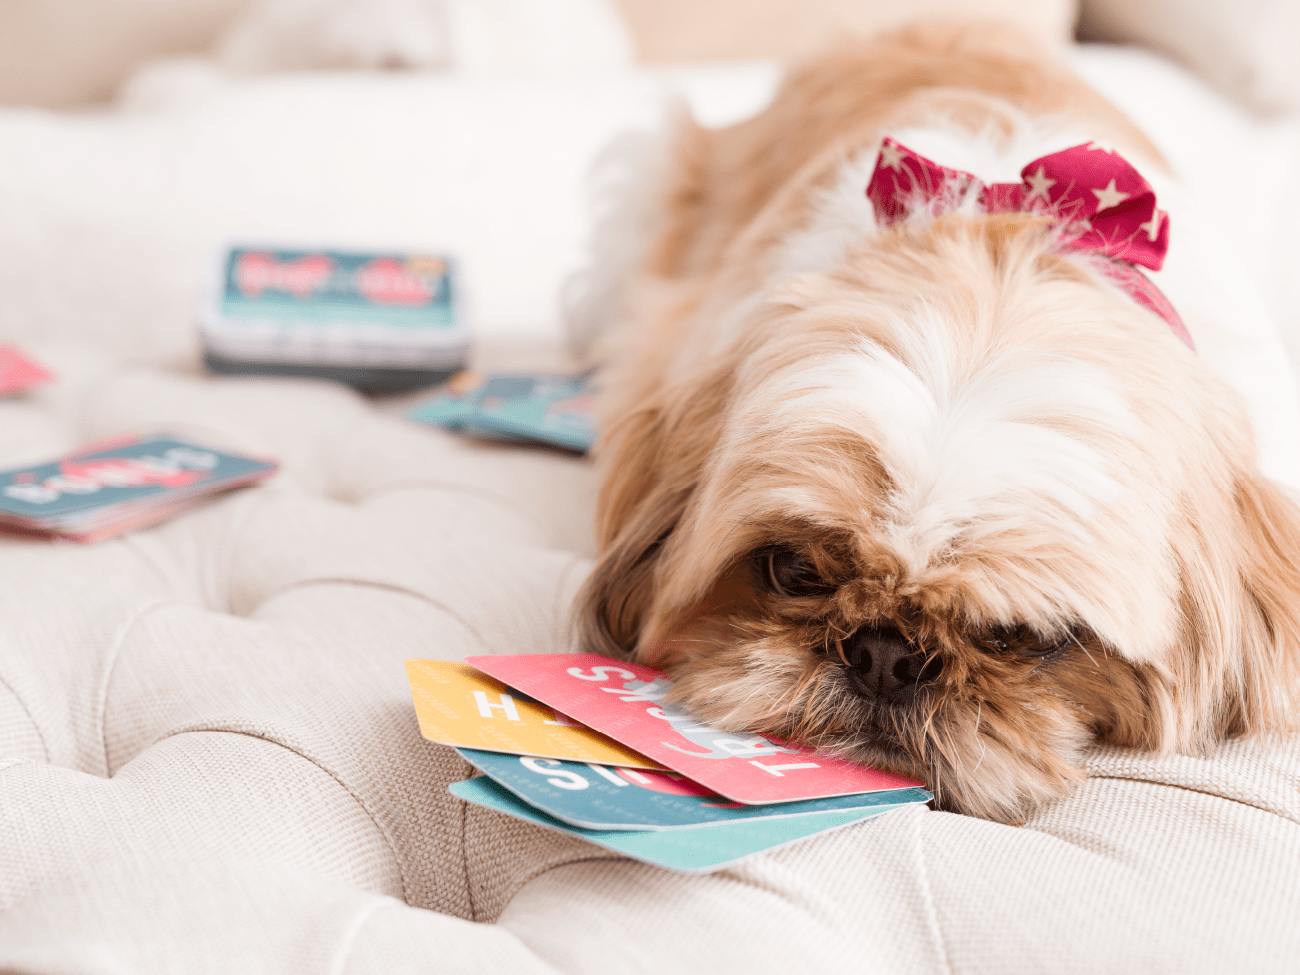 Tricks & Trivia Dog Card Game